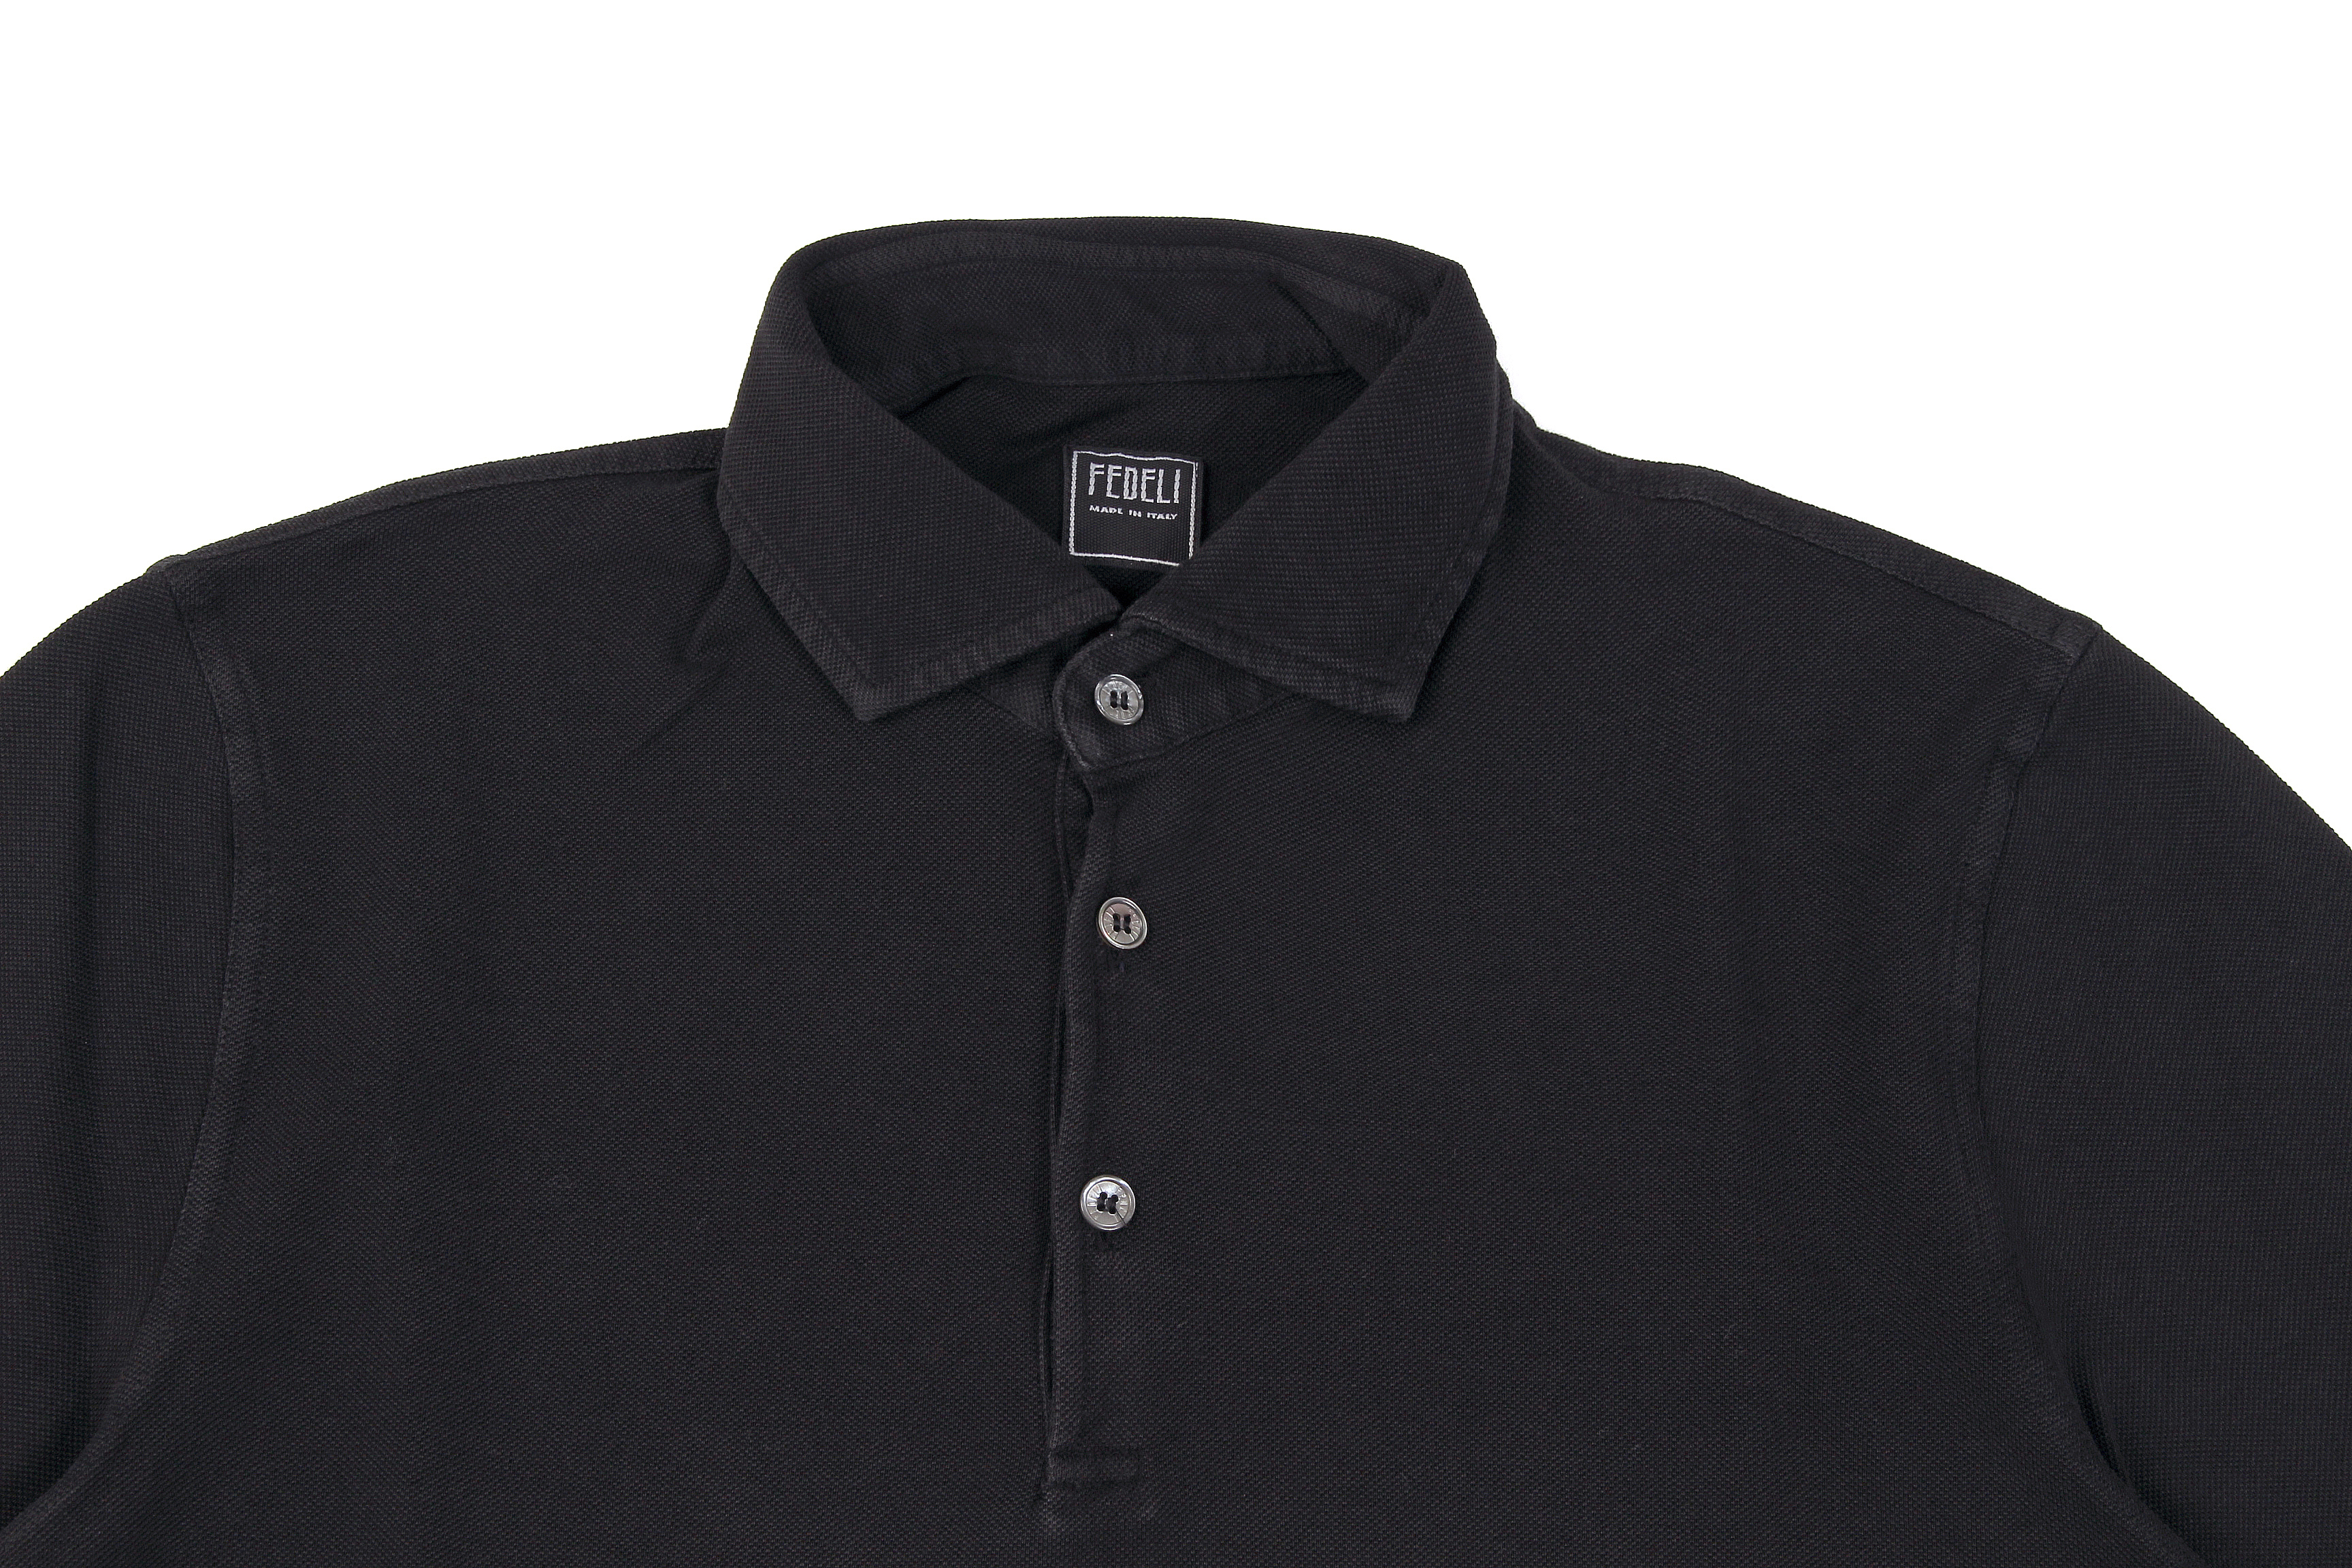 FEDELI(フェデーリ) Piquet Polo Shirt (ピケ ポロシャツ) カノコ ポロシャツ BLACK (ブラック・36) made in italy (イタリア製)2020 春夏 【ご予約開始】愛知 名古屋 altoediritto アルトエデリット ポロ